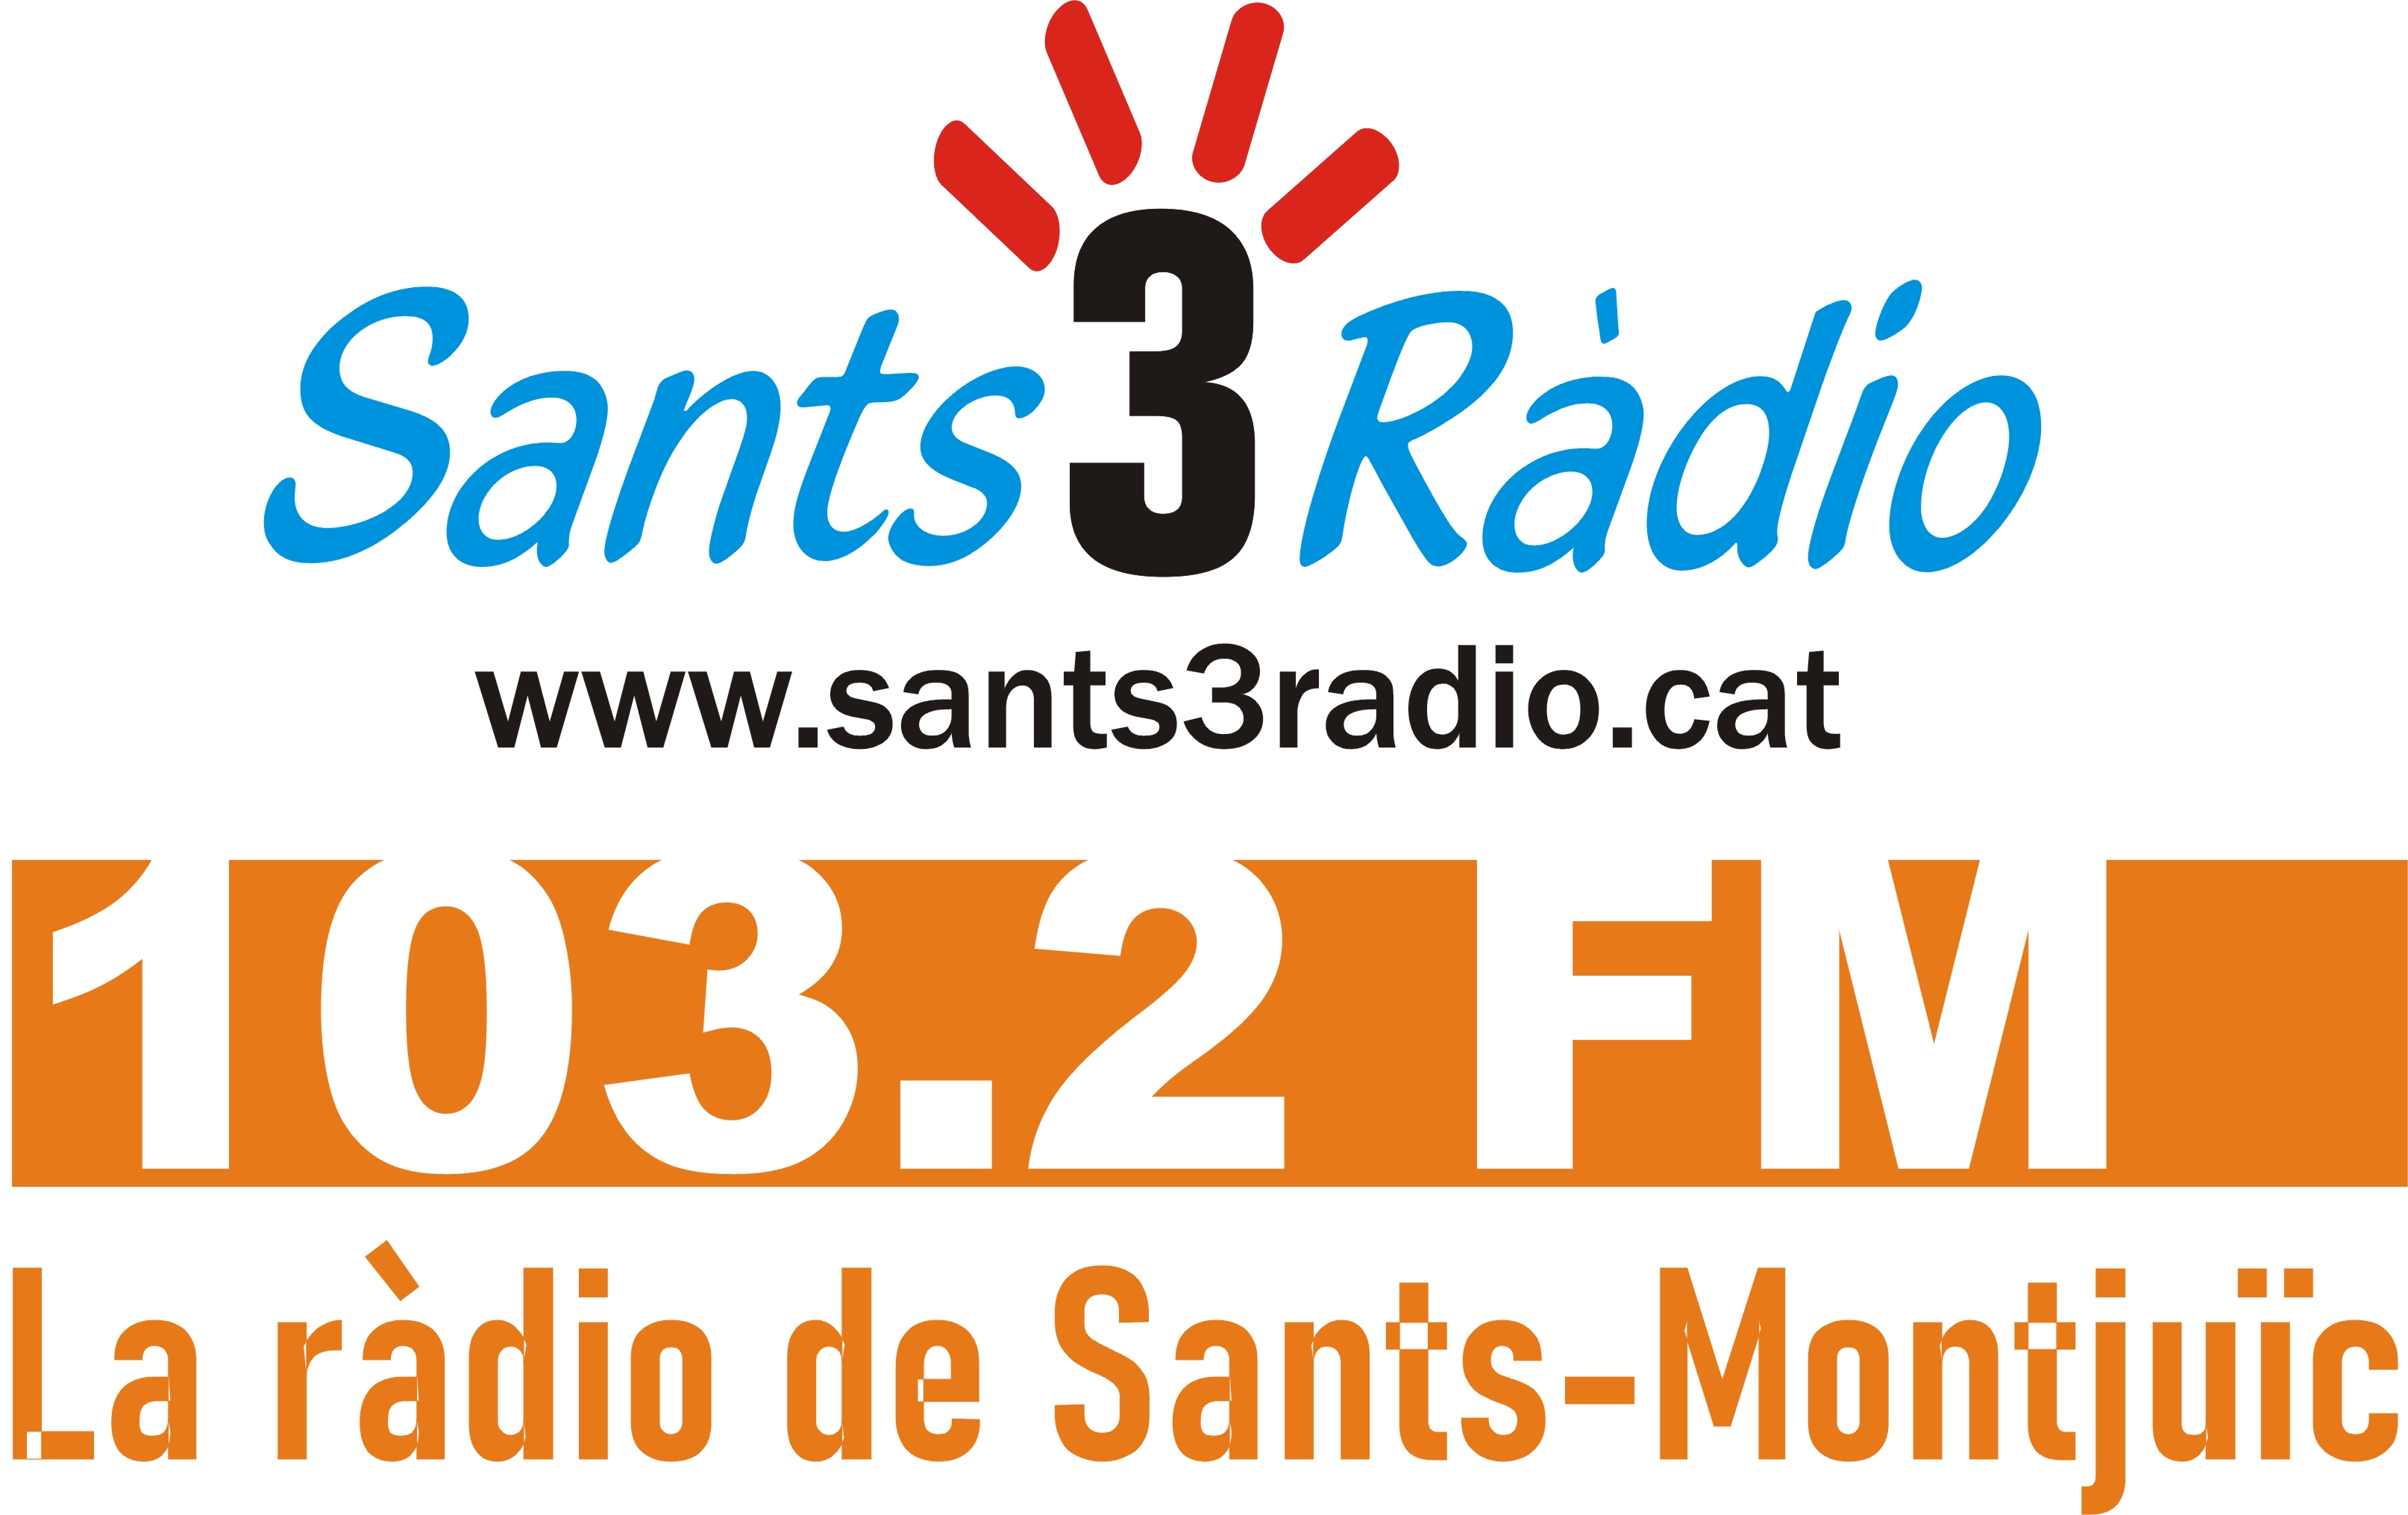 Avatar: Sants 3 Ràdio - La ràdio local de Sants-Montjuïc